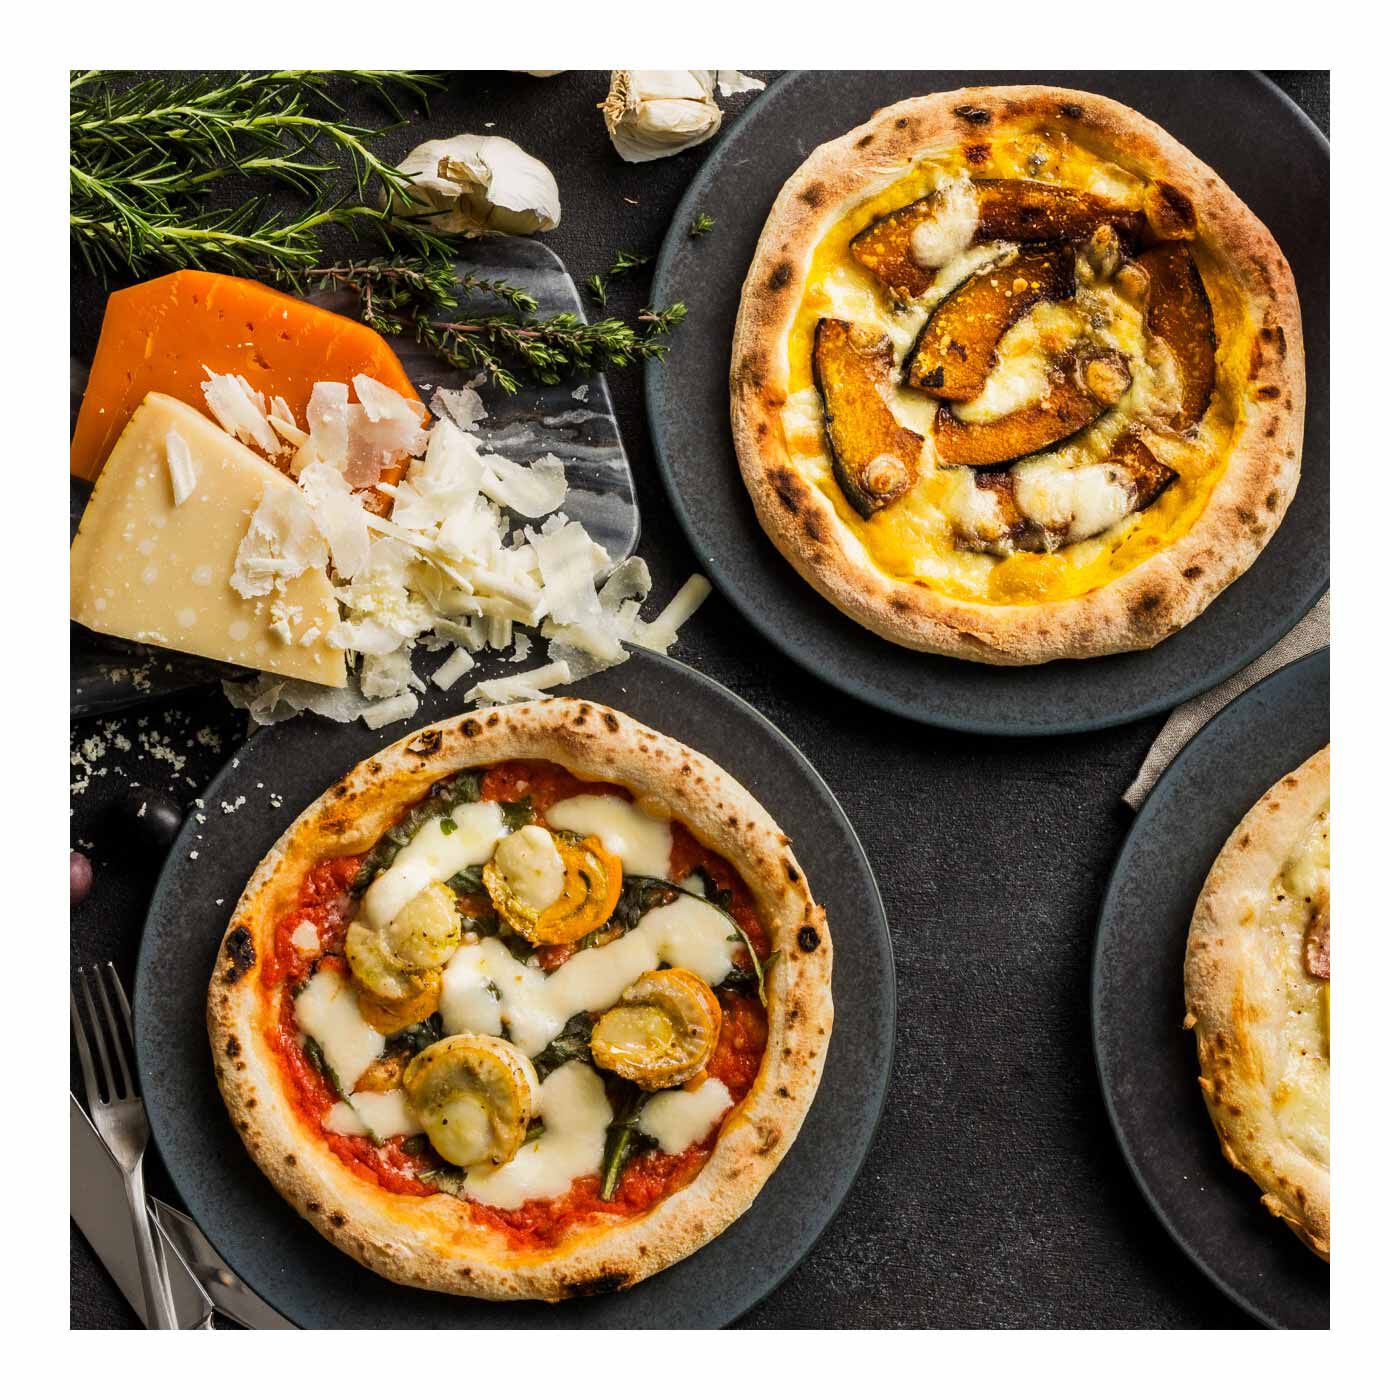 FP産地直送マルシェ|【締切 6/5】塩屋で人気の「ピザ・アキラッチ」 地元の素材を生かした窯焼きピザ12ヵ月コース